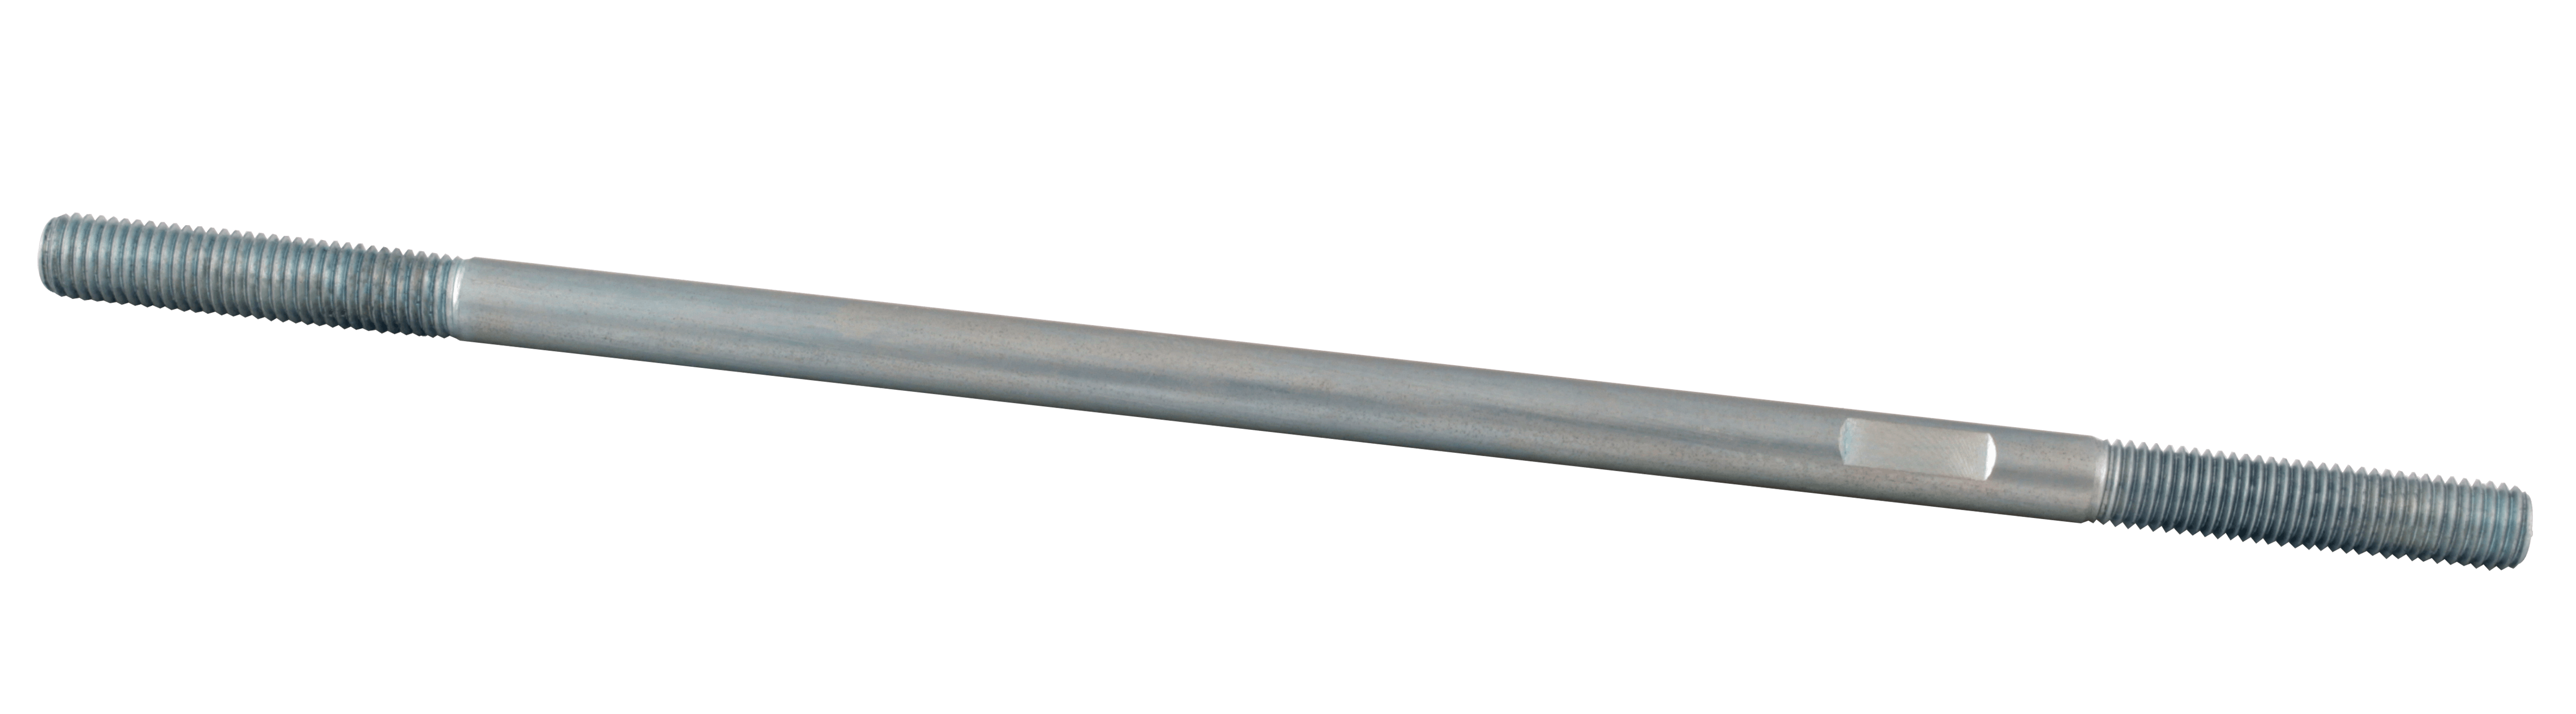 QA1 1698-115 Linkage Rod, Carbon Steel 1/4-28 - 1/4-28 X 7.5 inch Long